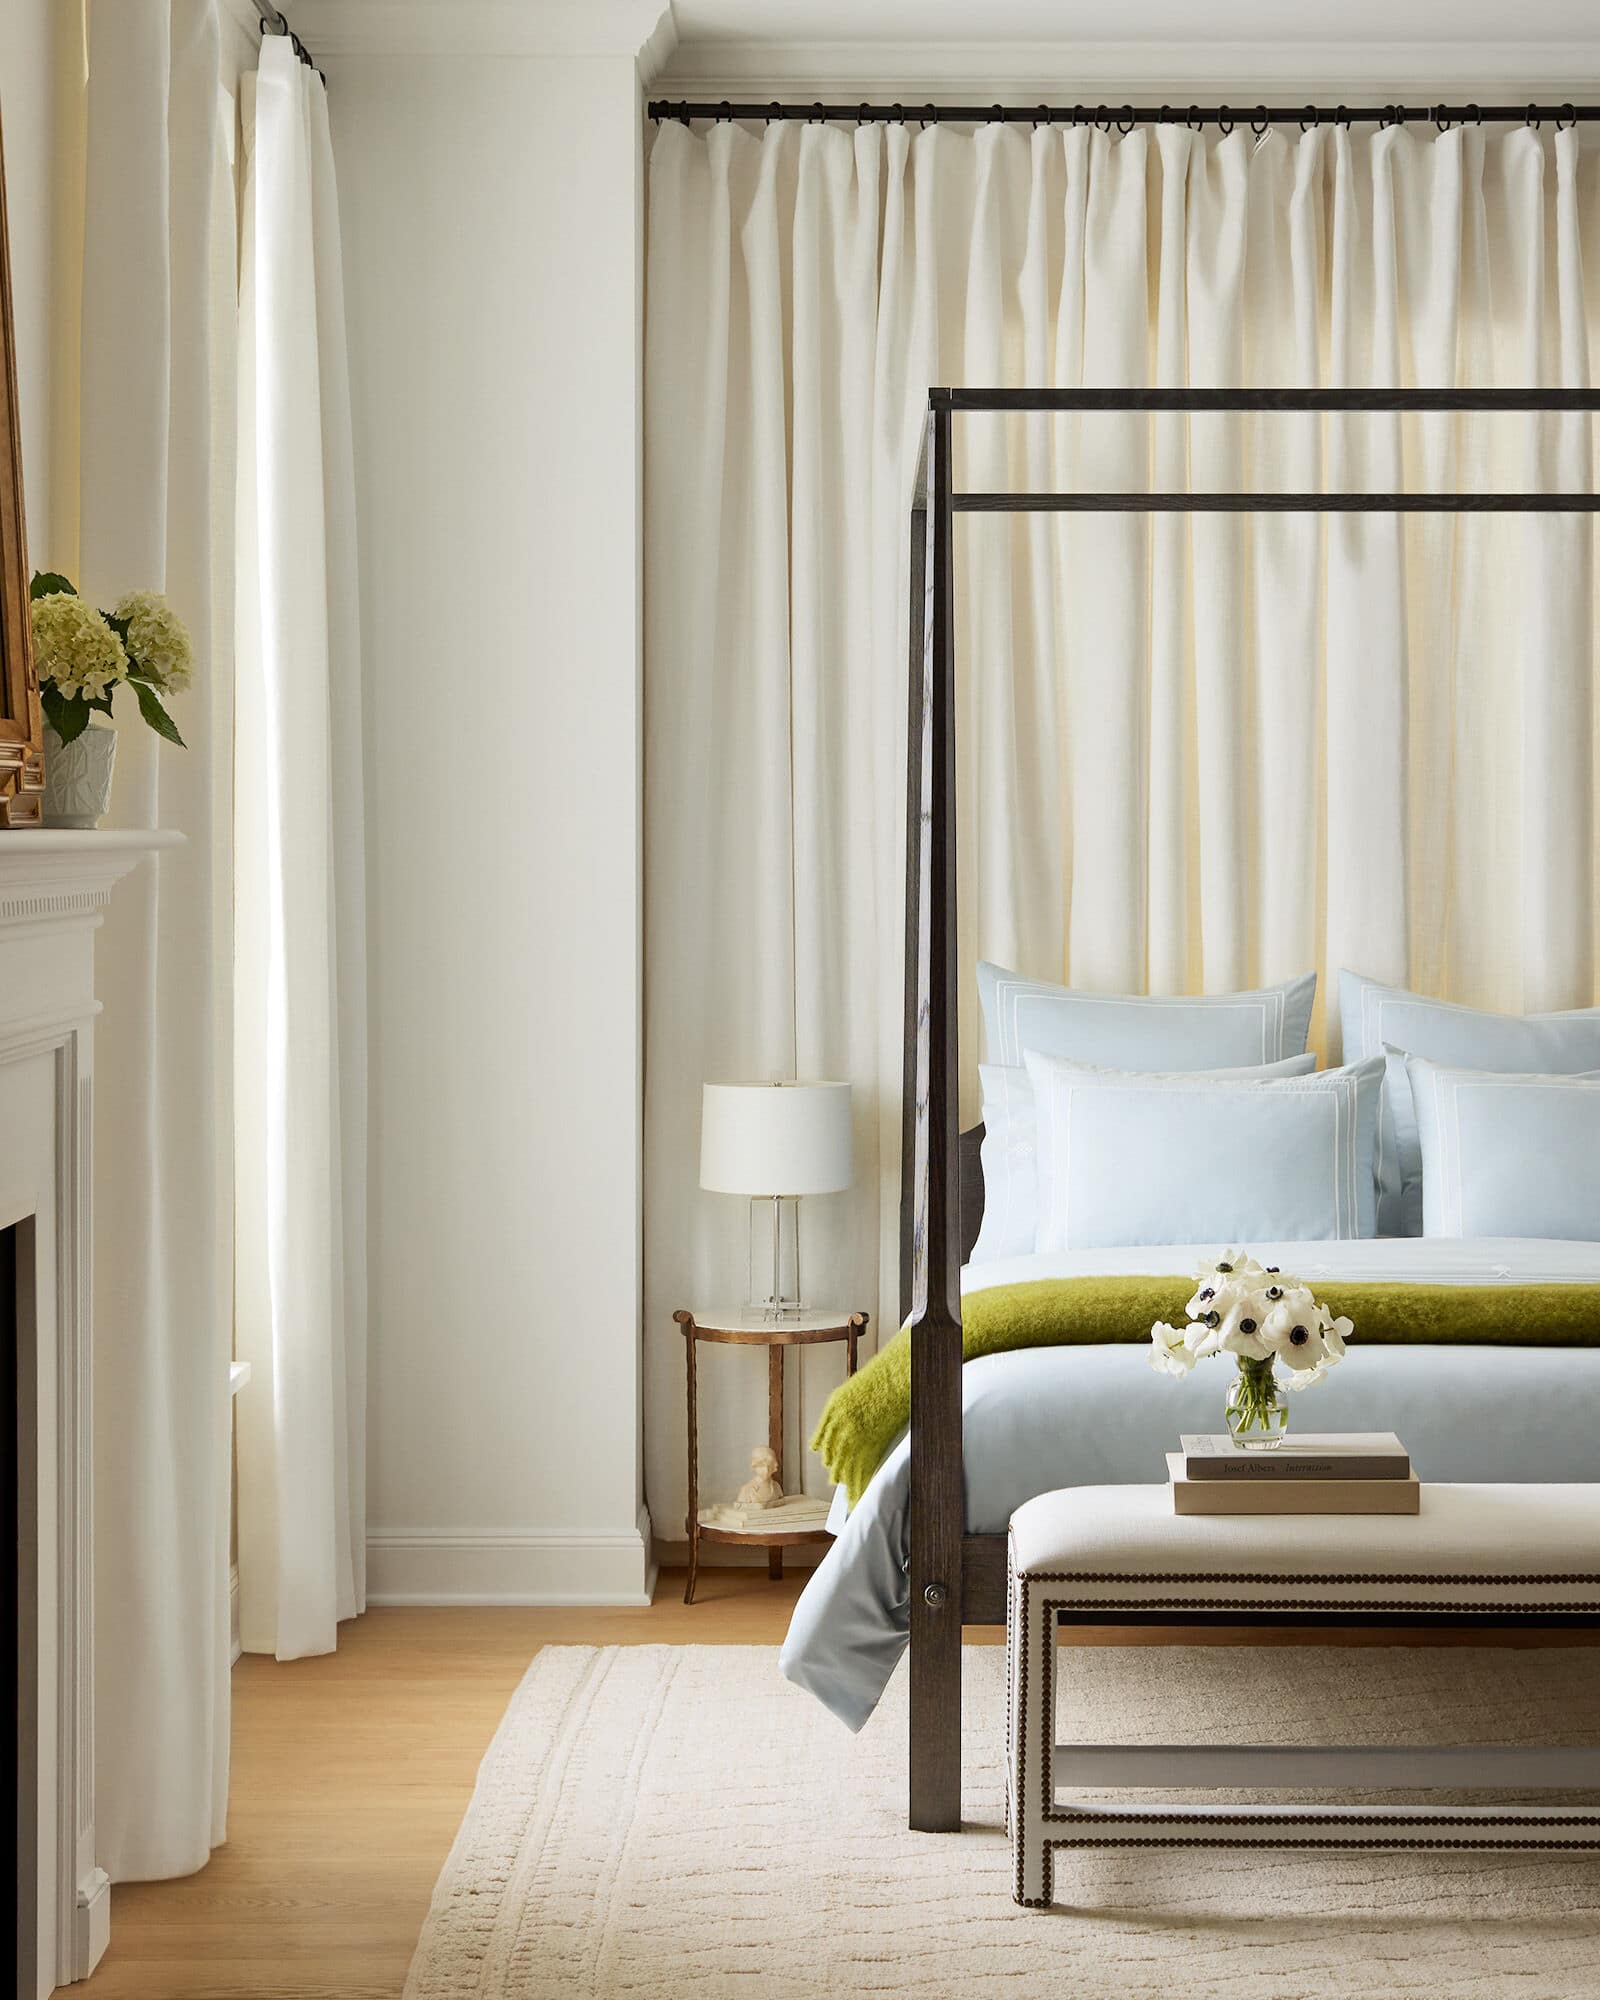 heart-stopping bedroom, Favorite New Arrivals  - serena & lily, bedroom, bedroom design, 4-poster bed